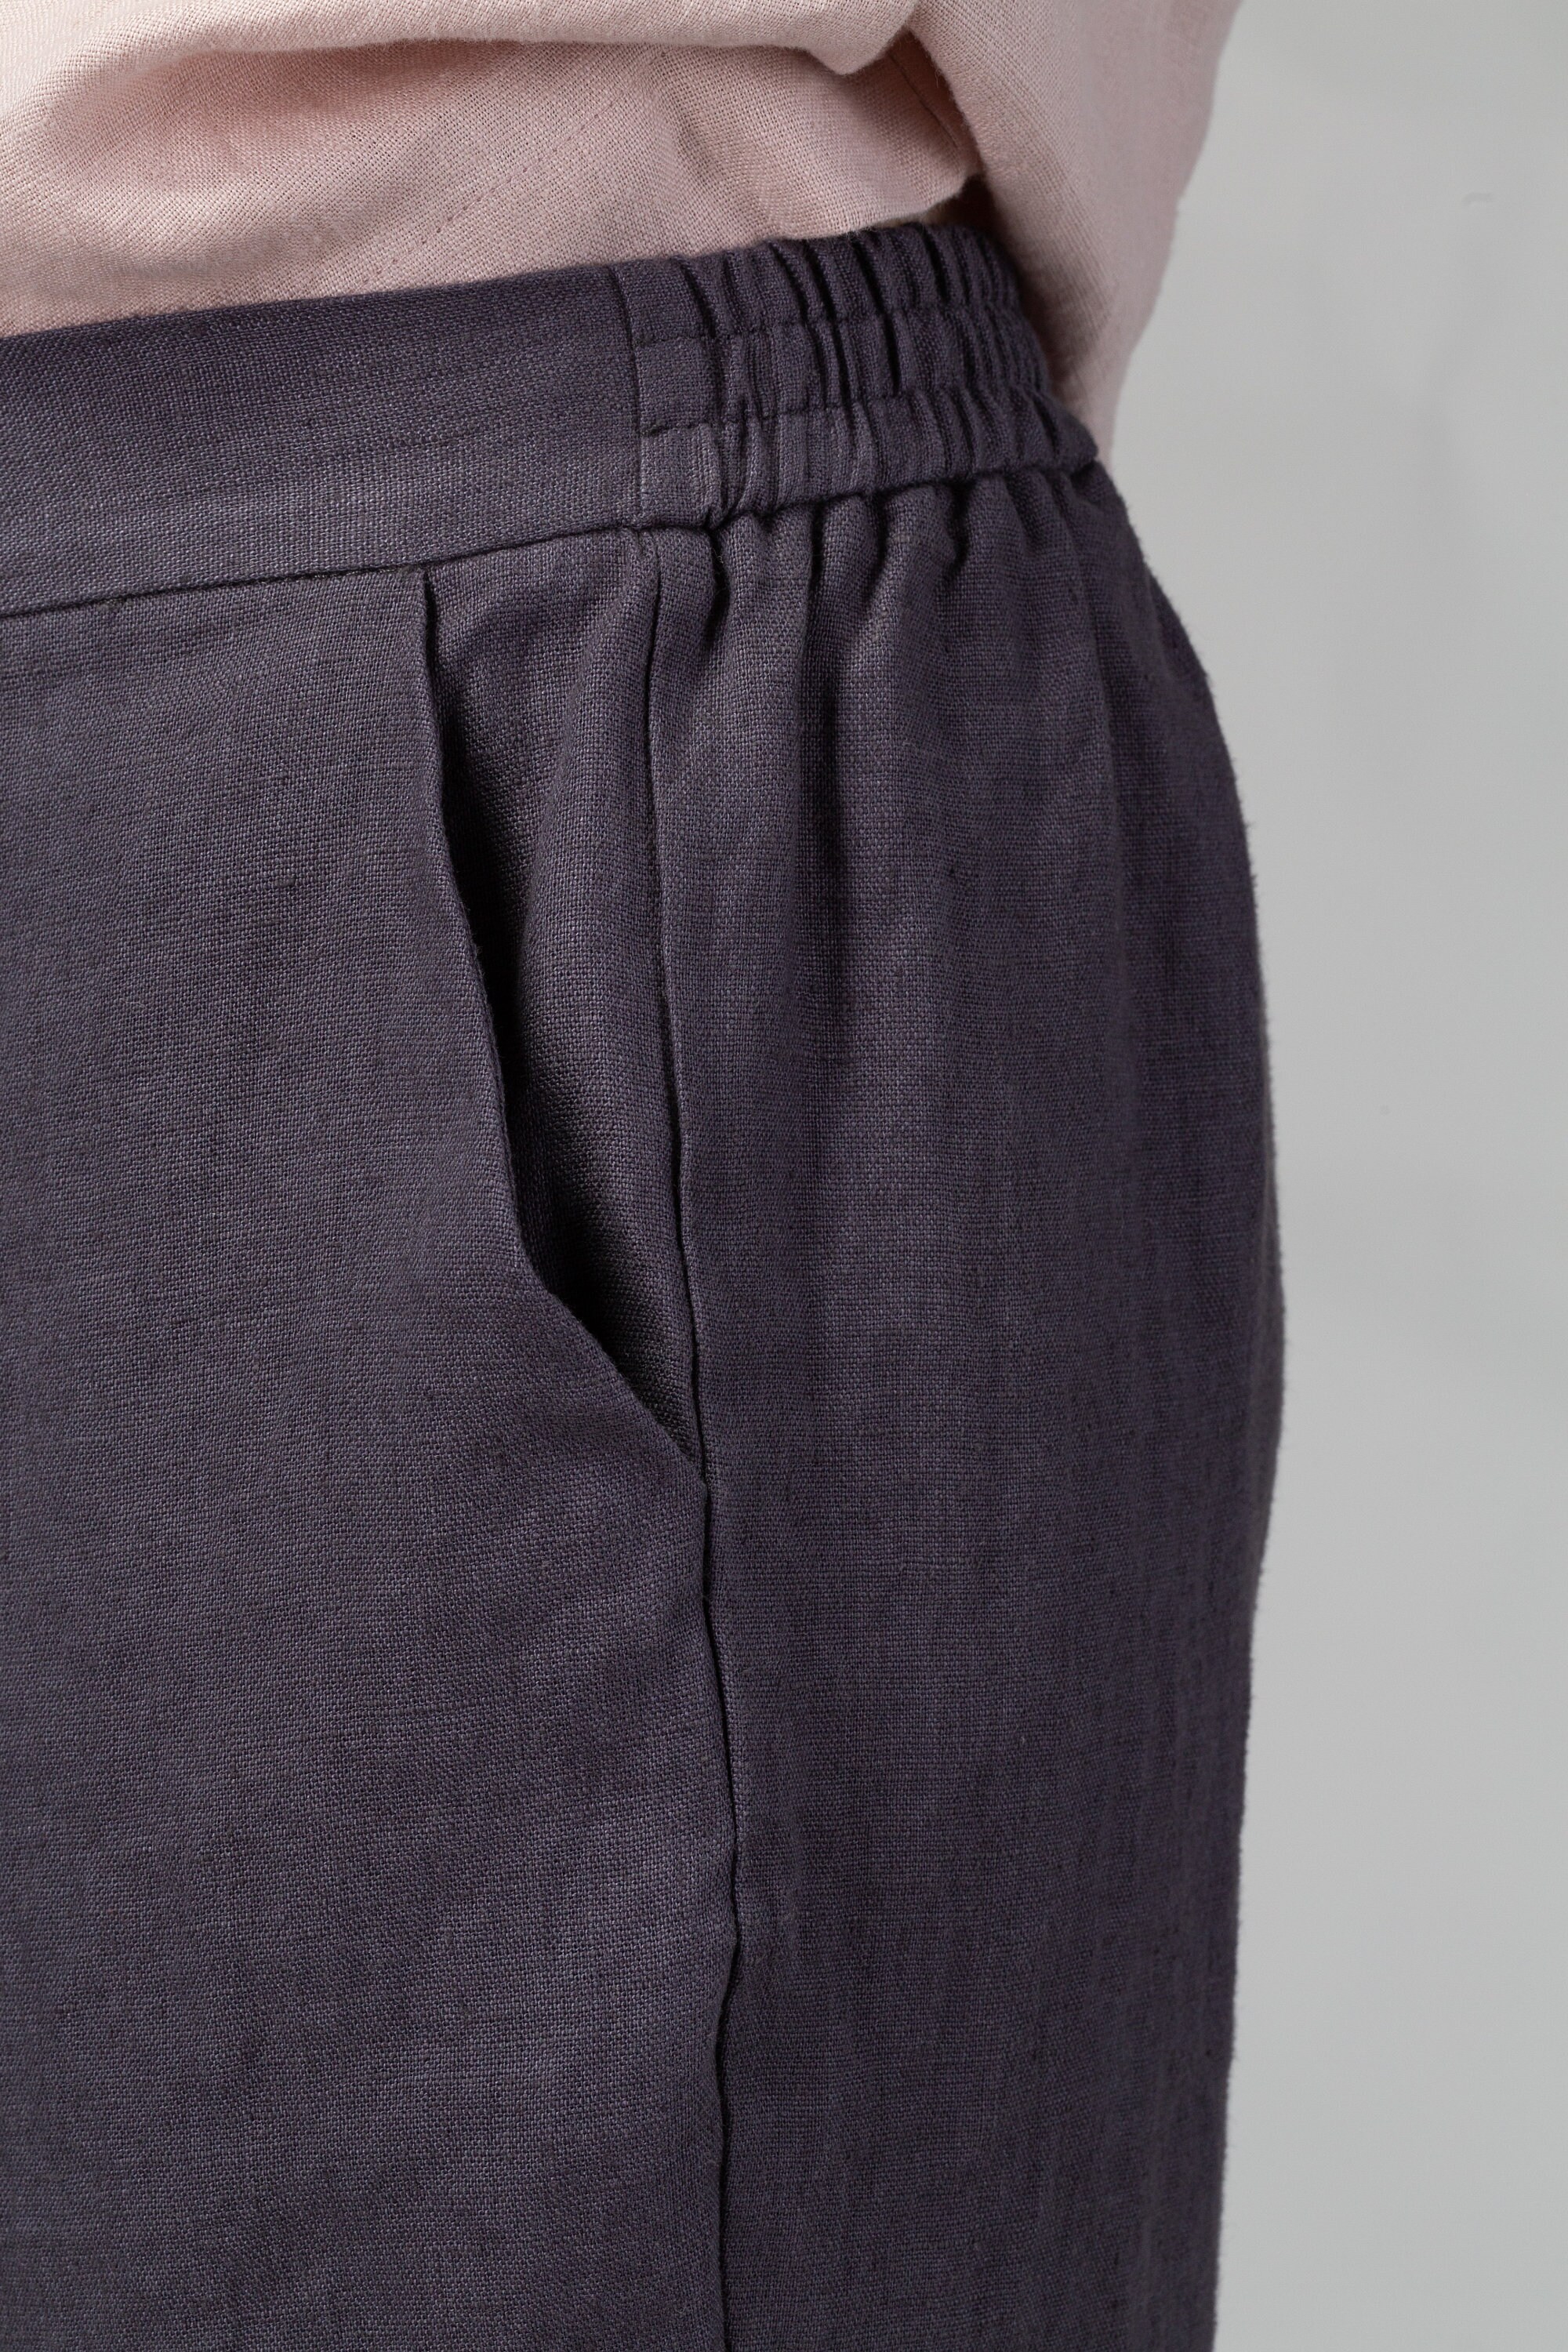 Linen Jogger Pants Dark Grey Linen Summer Pants Linen - Etsy